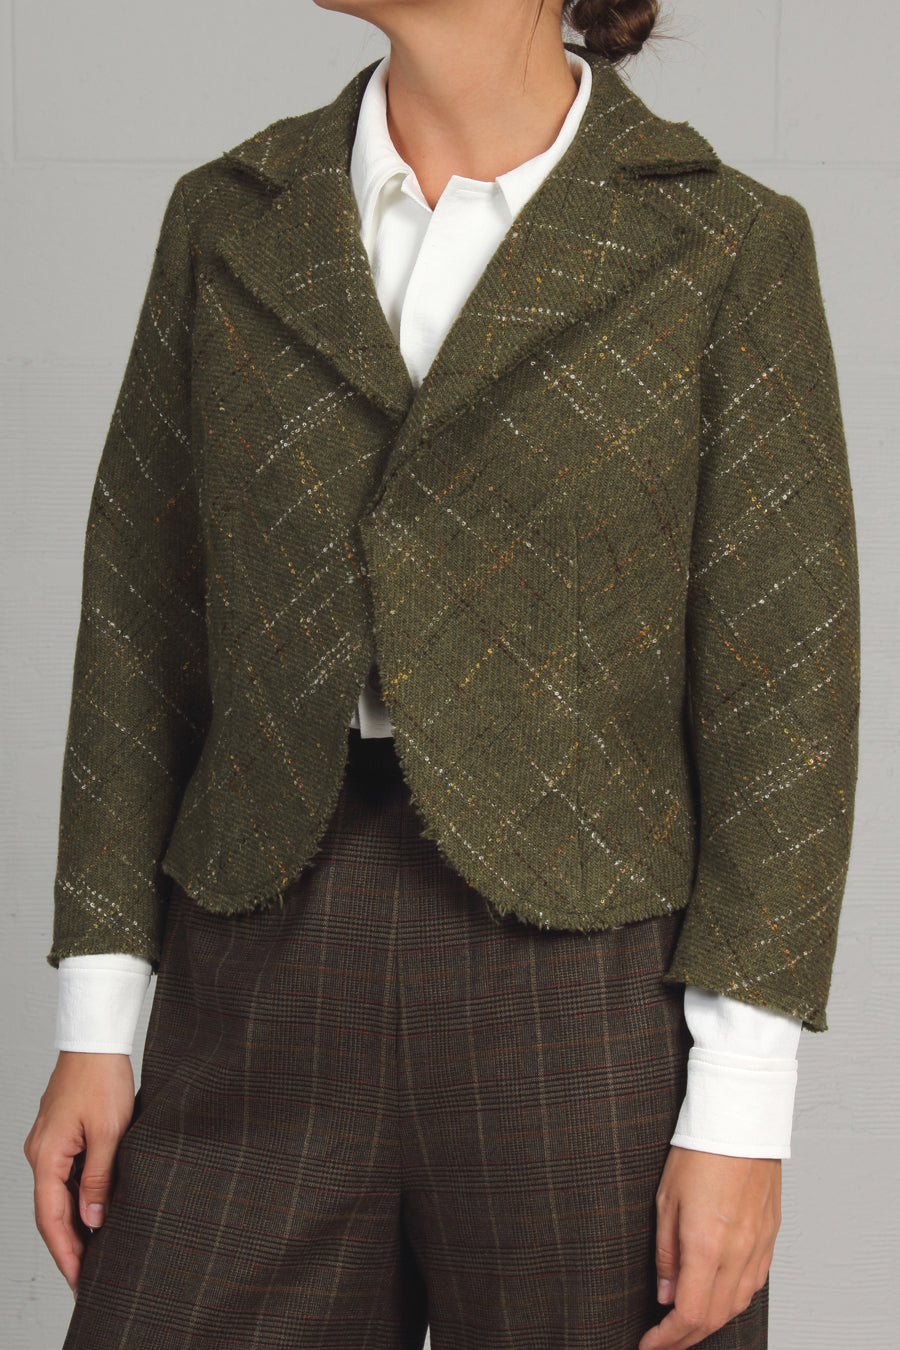 Plaid Wool Shep Jacket - green - large - last one!